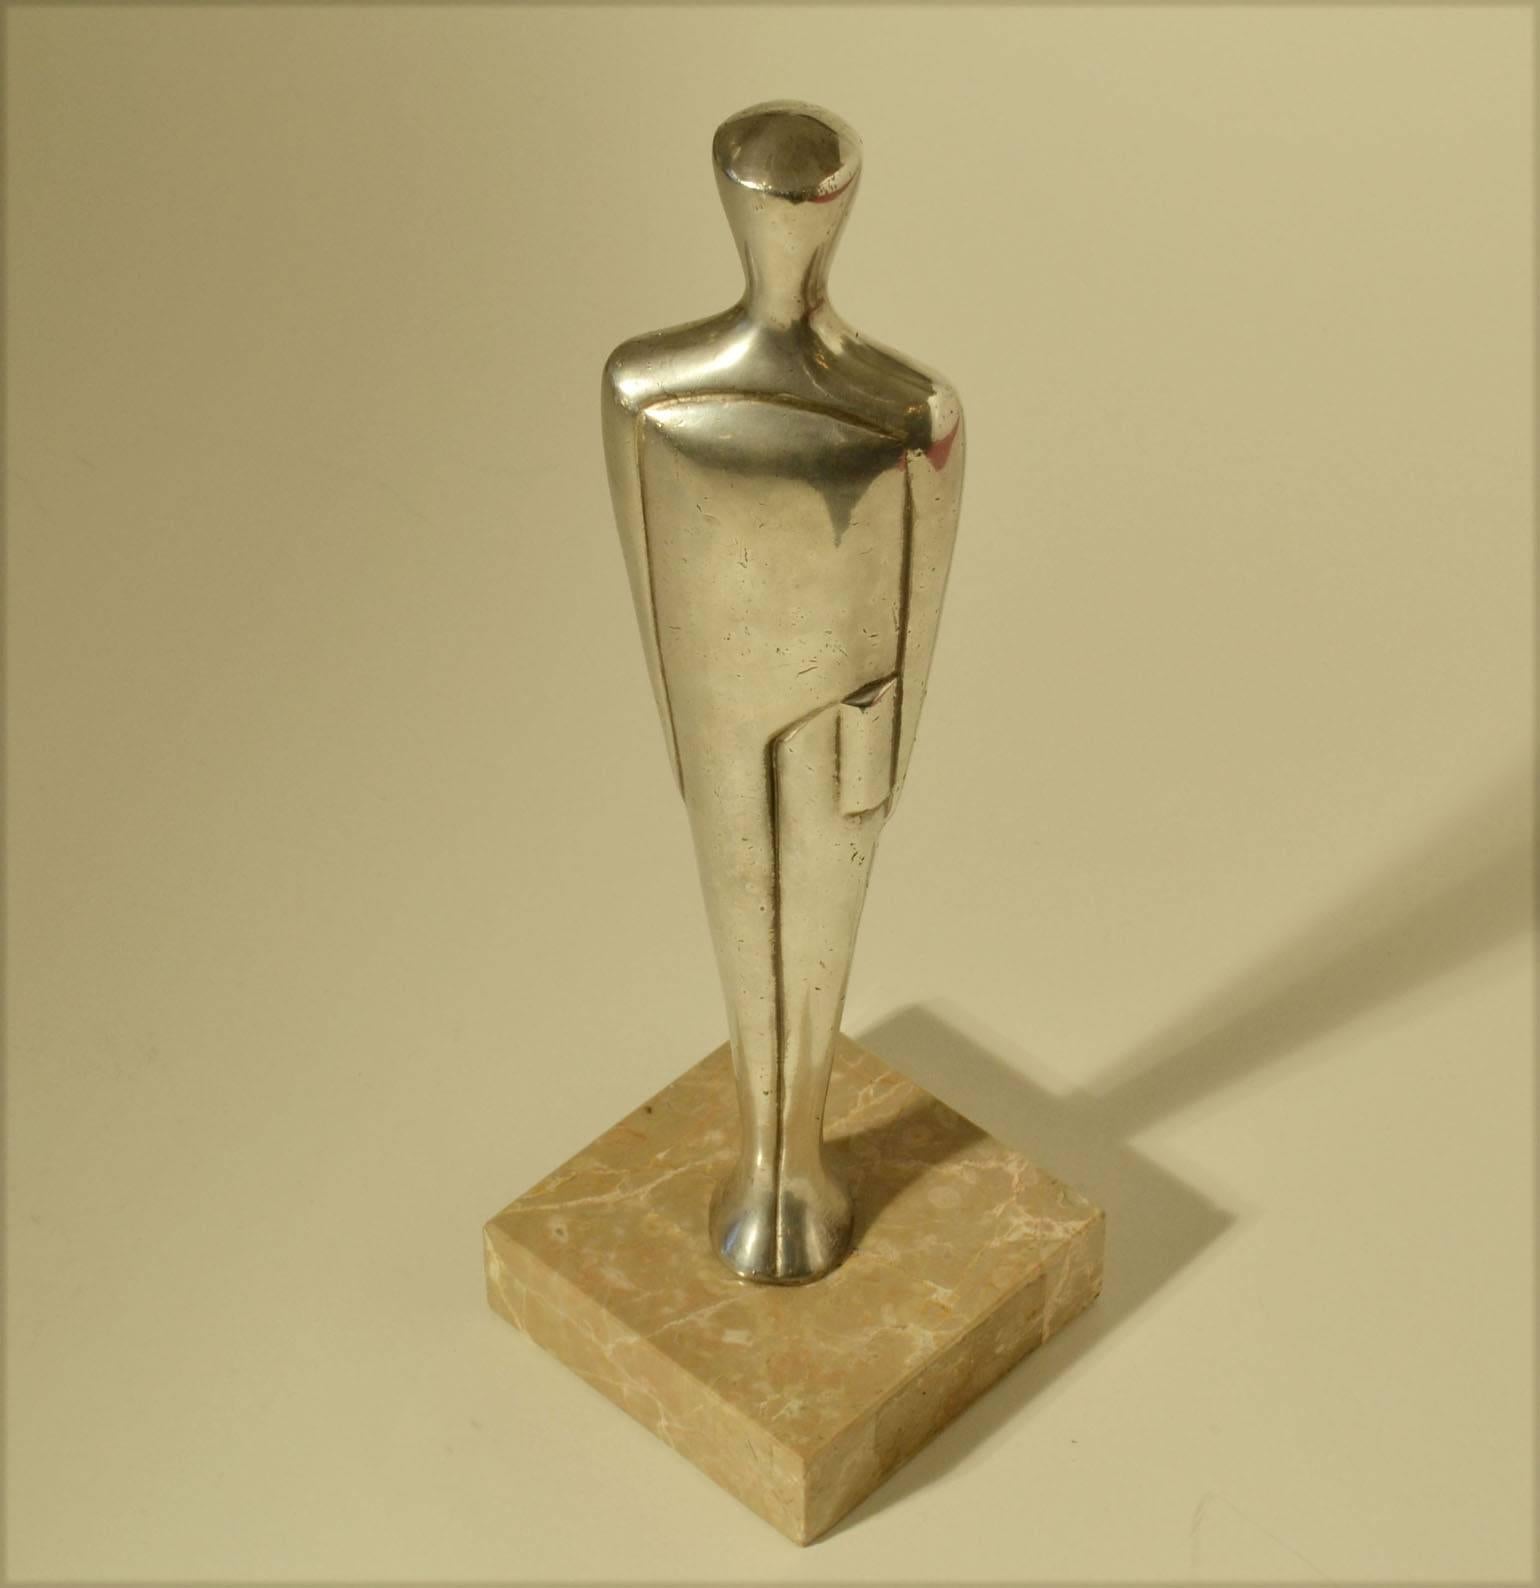 Art Deco 1930s Figurative Oscar Sculpture by E.W. Lane